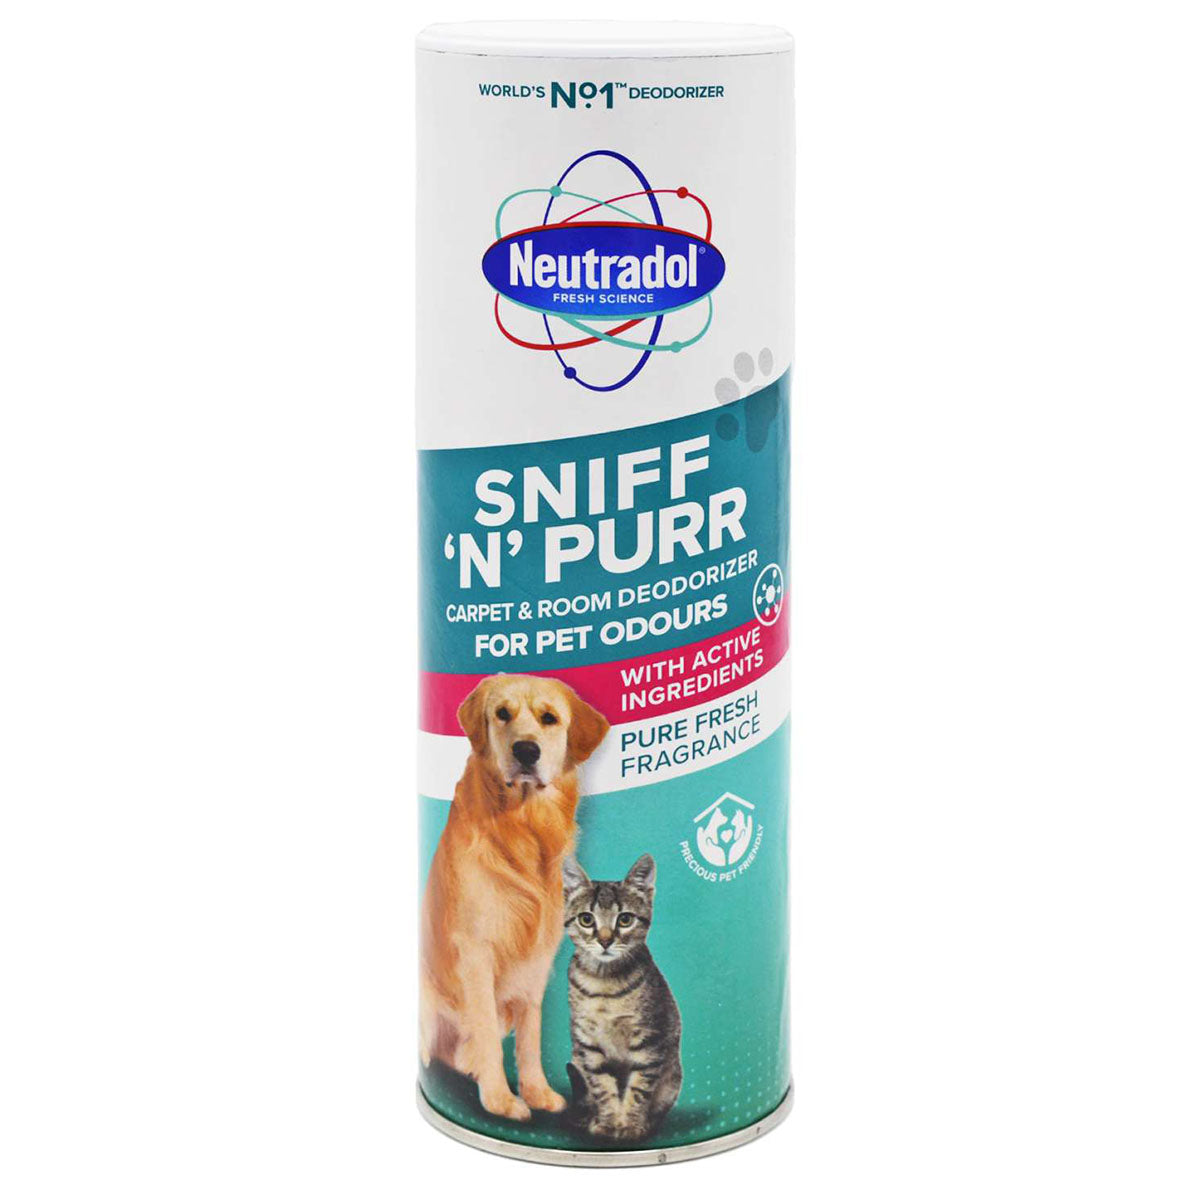 Neutradol - Sniff 'N' Purr Pet Carpet Deodorizer - 525g - Continental Food Store